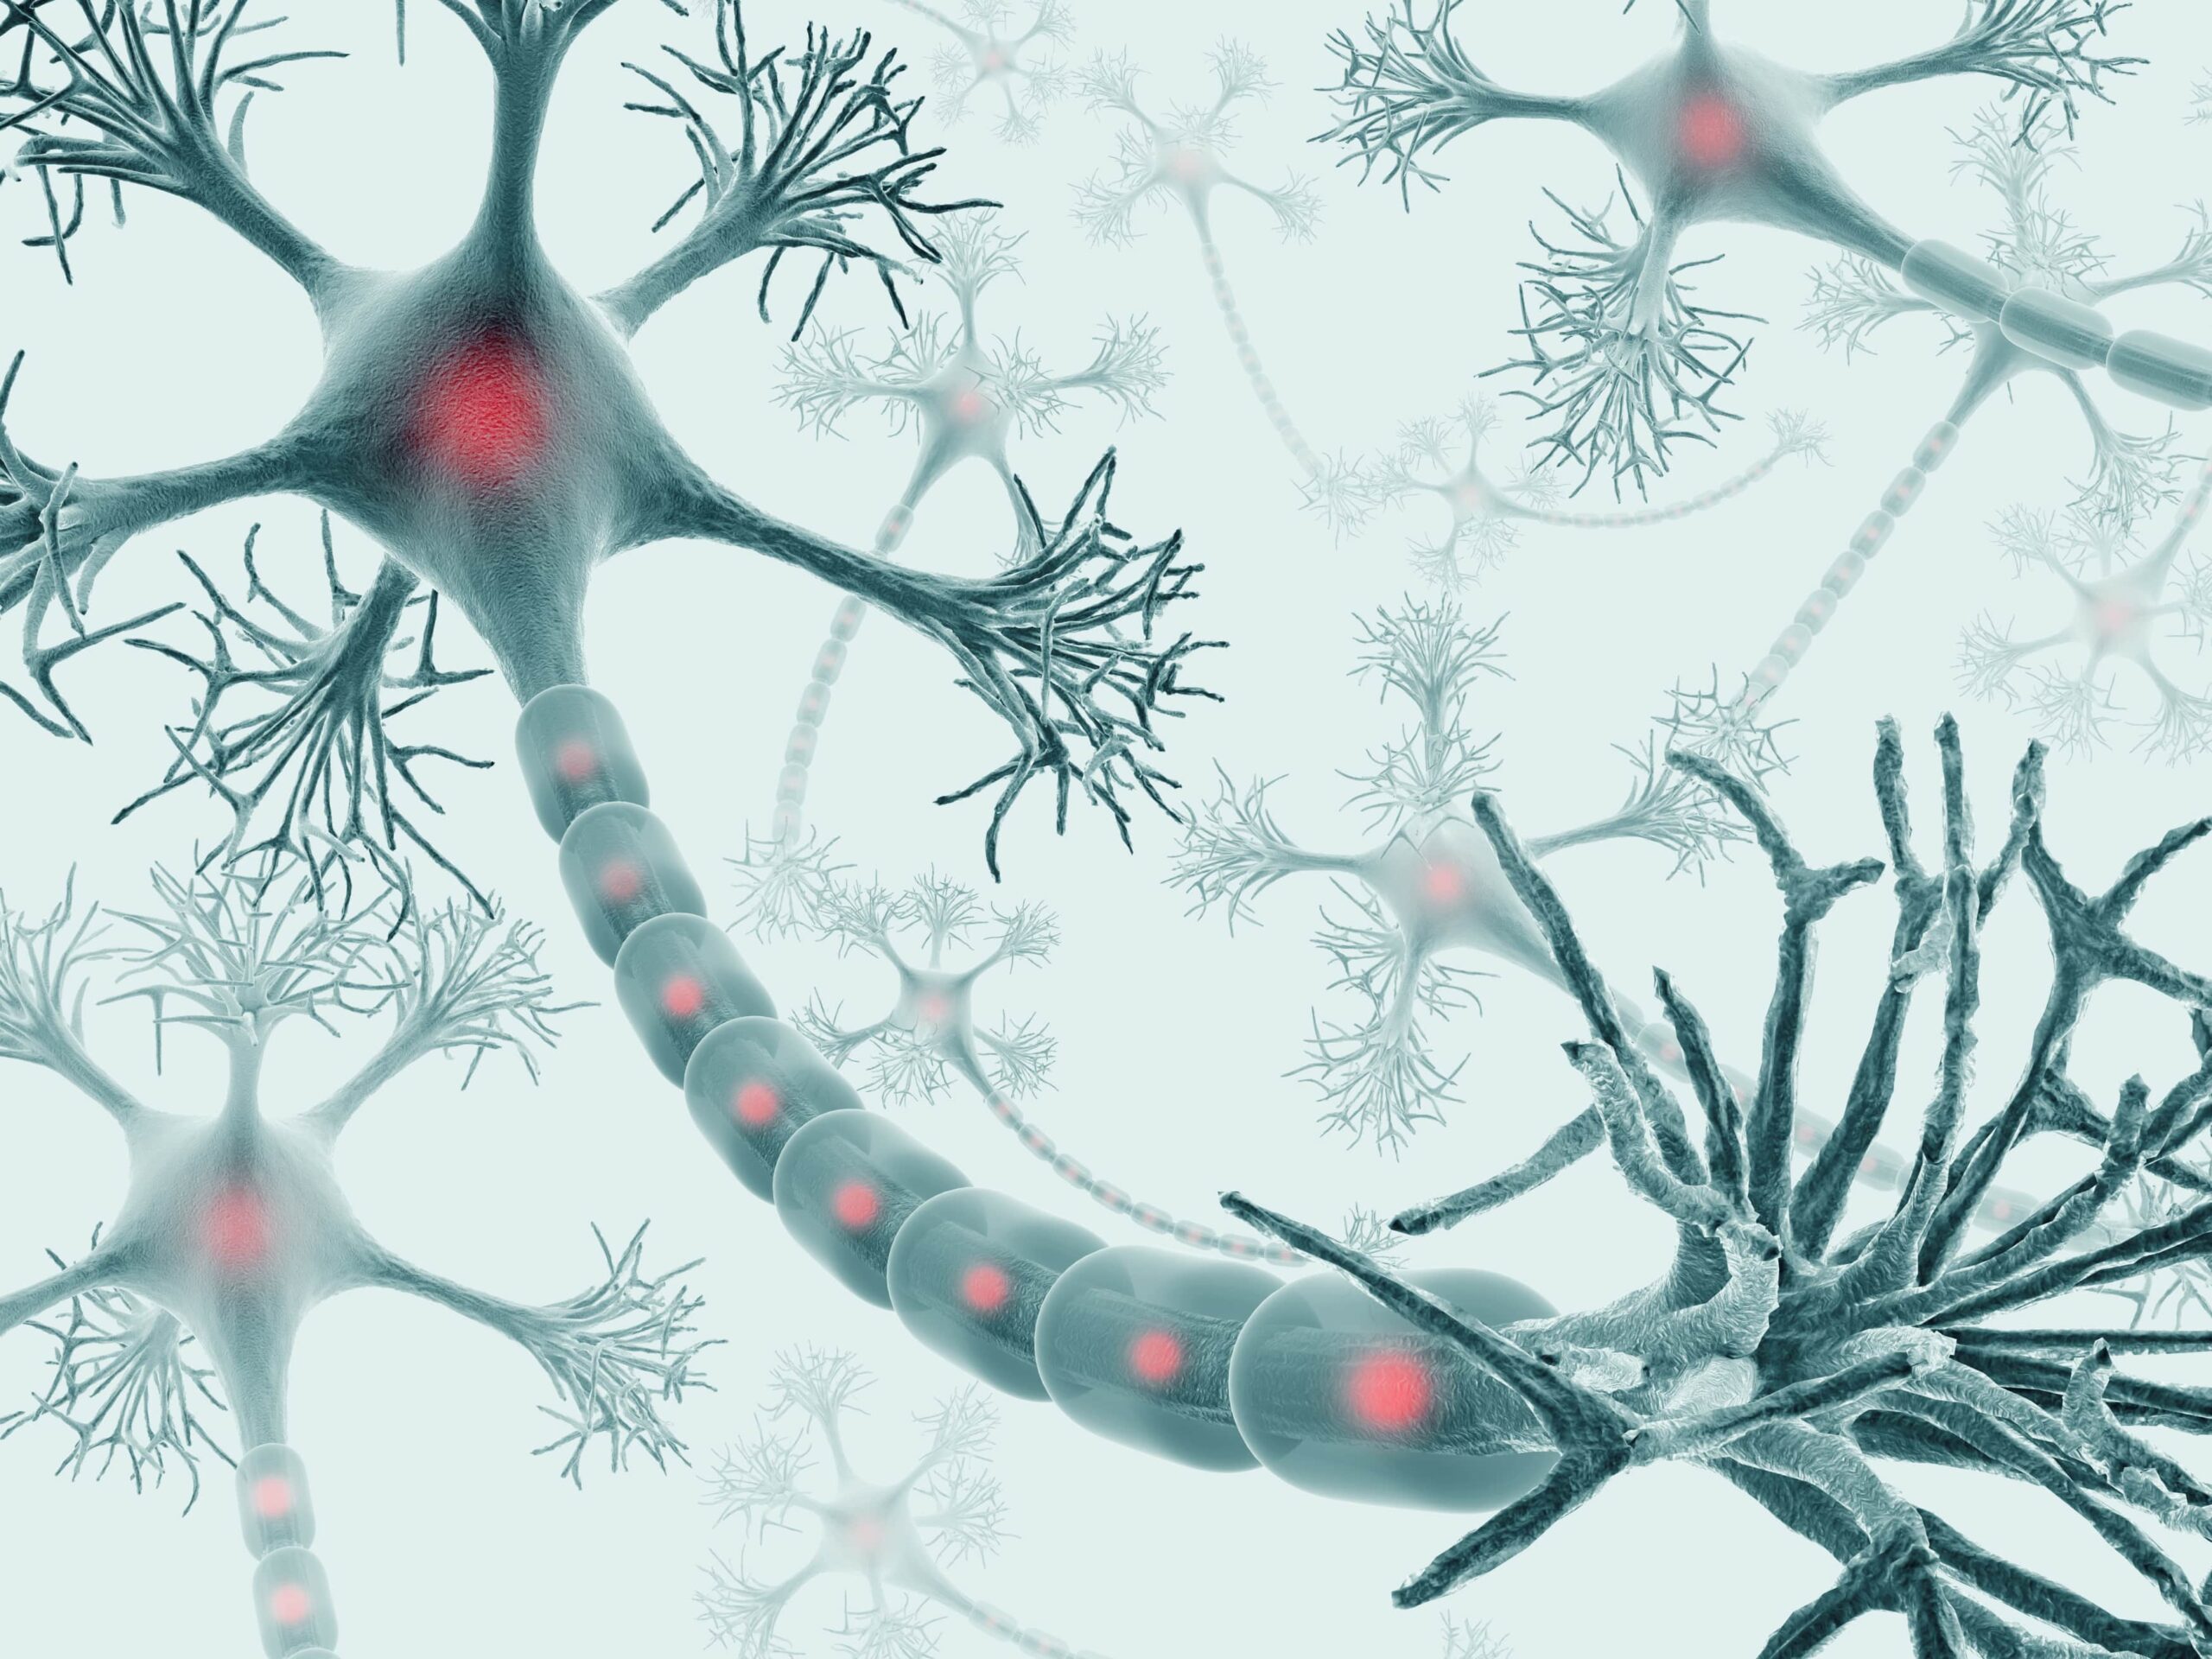 Graphic illustration of nervous system, neuron